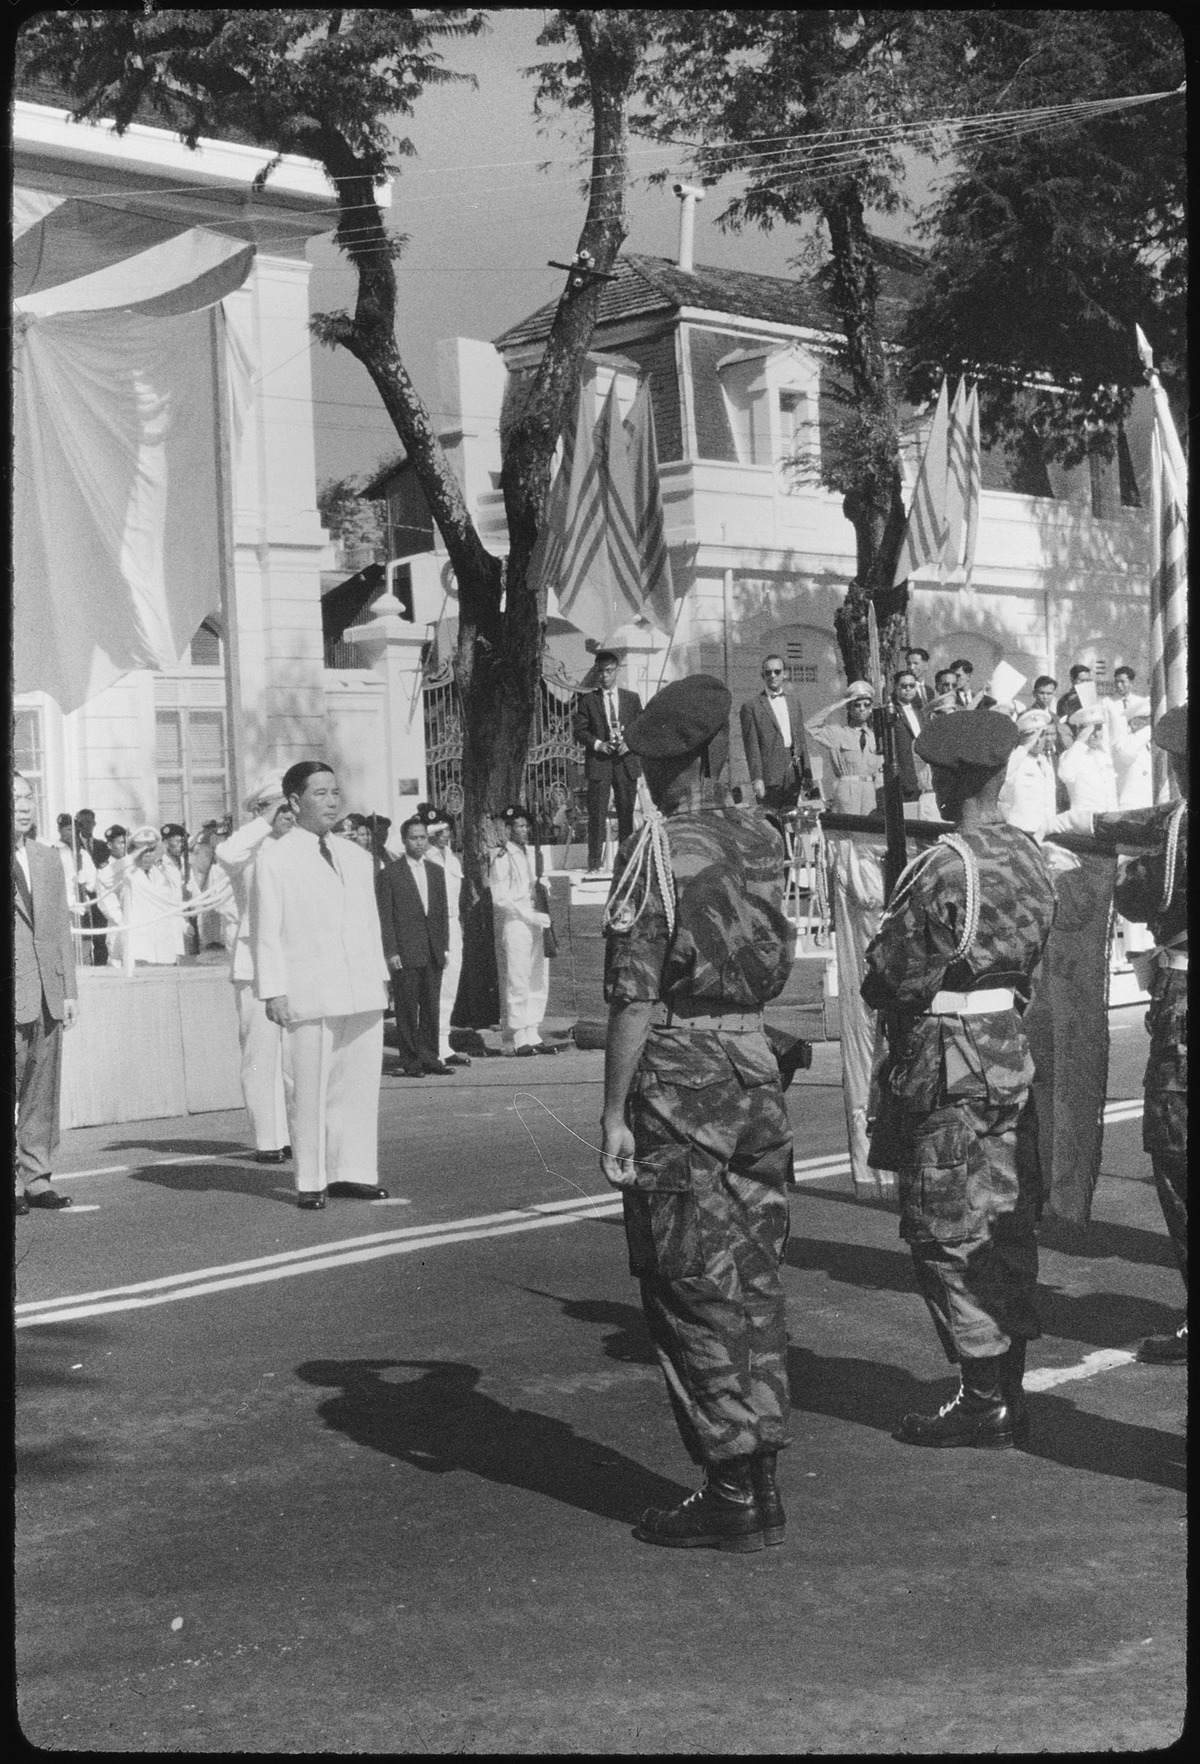 1963 south vietnamese coup - wikipedia